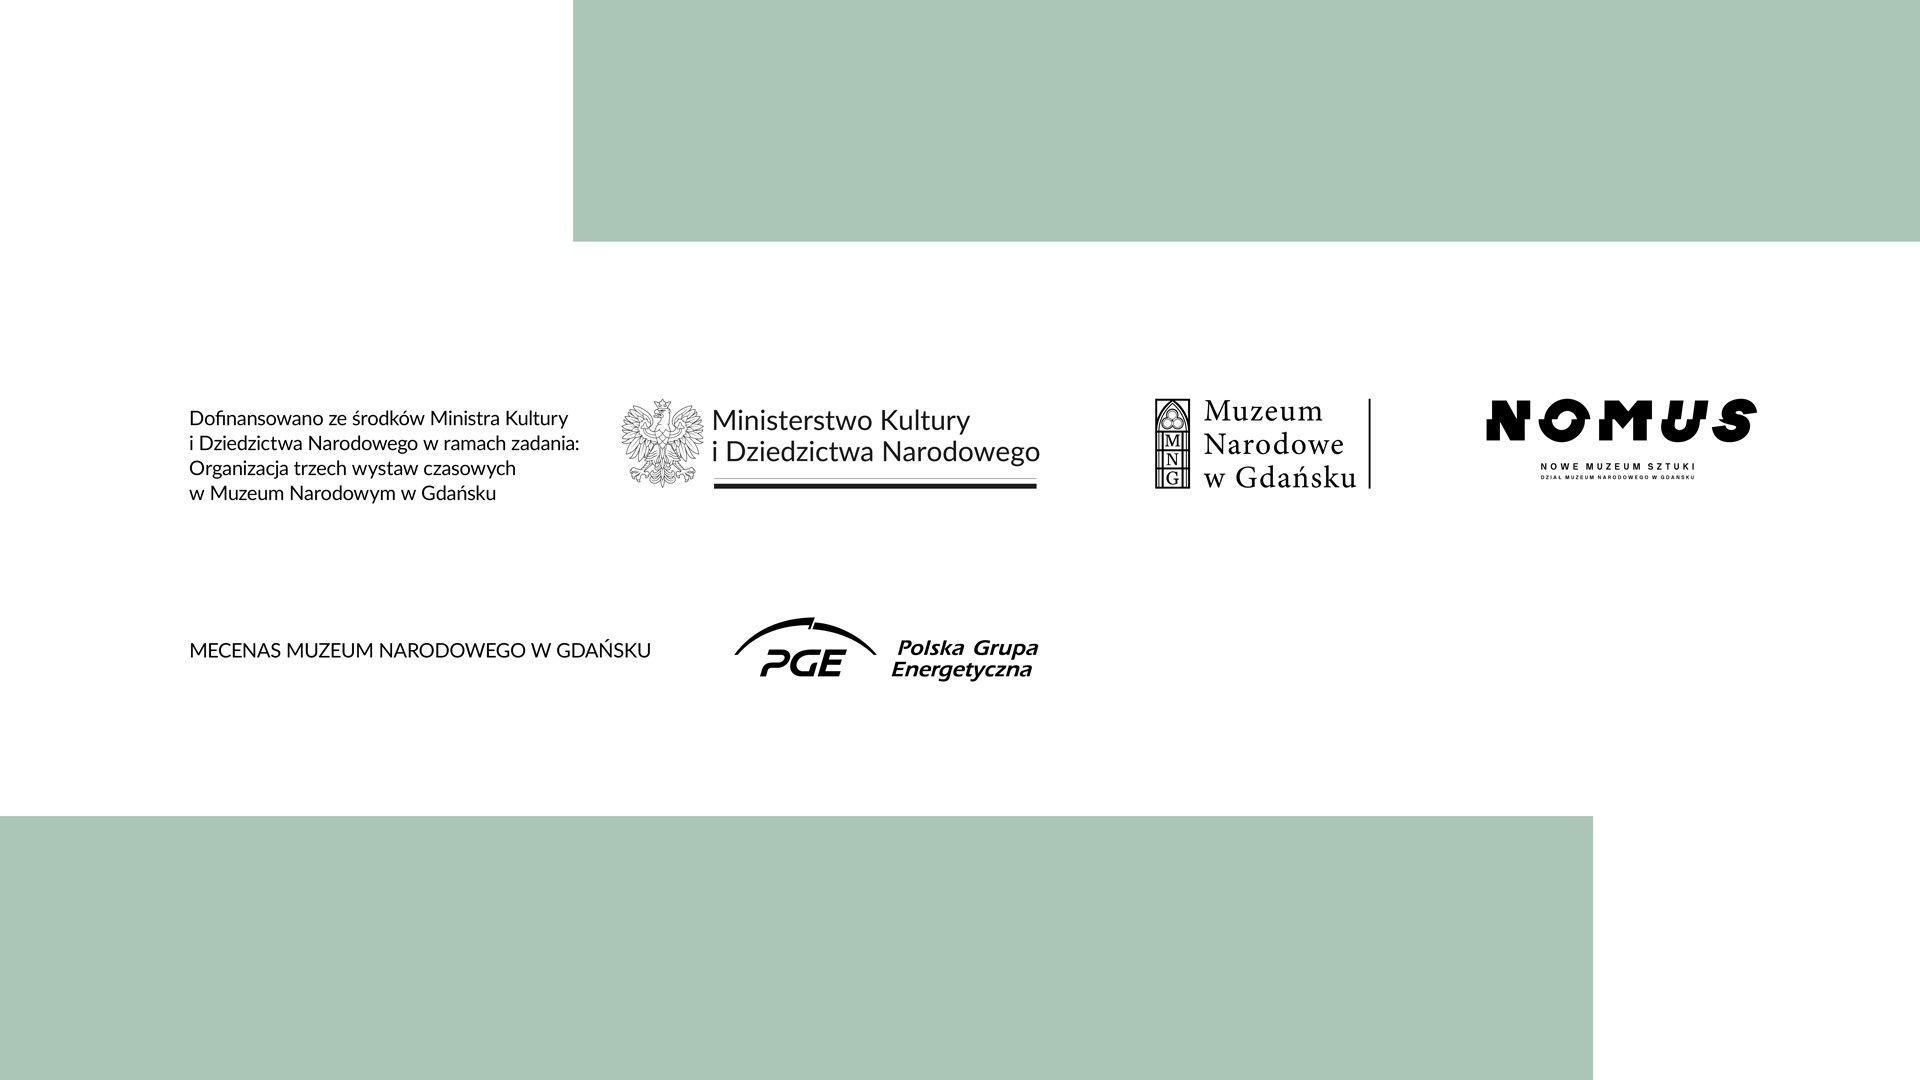 Logos of exhibition organizers